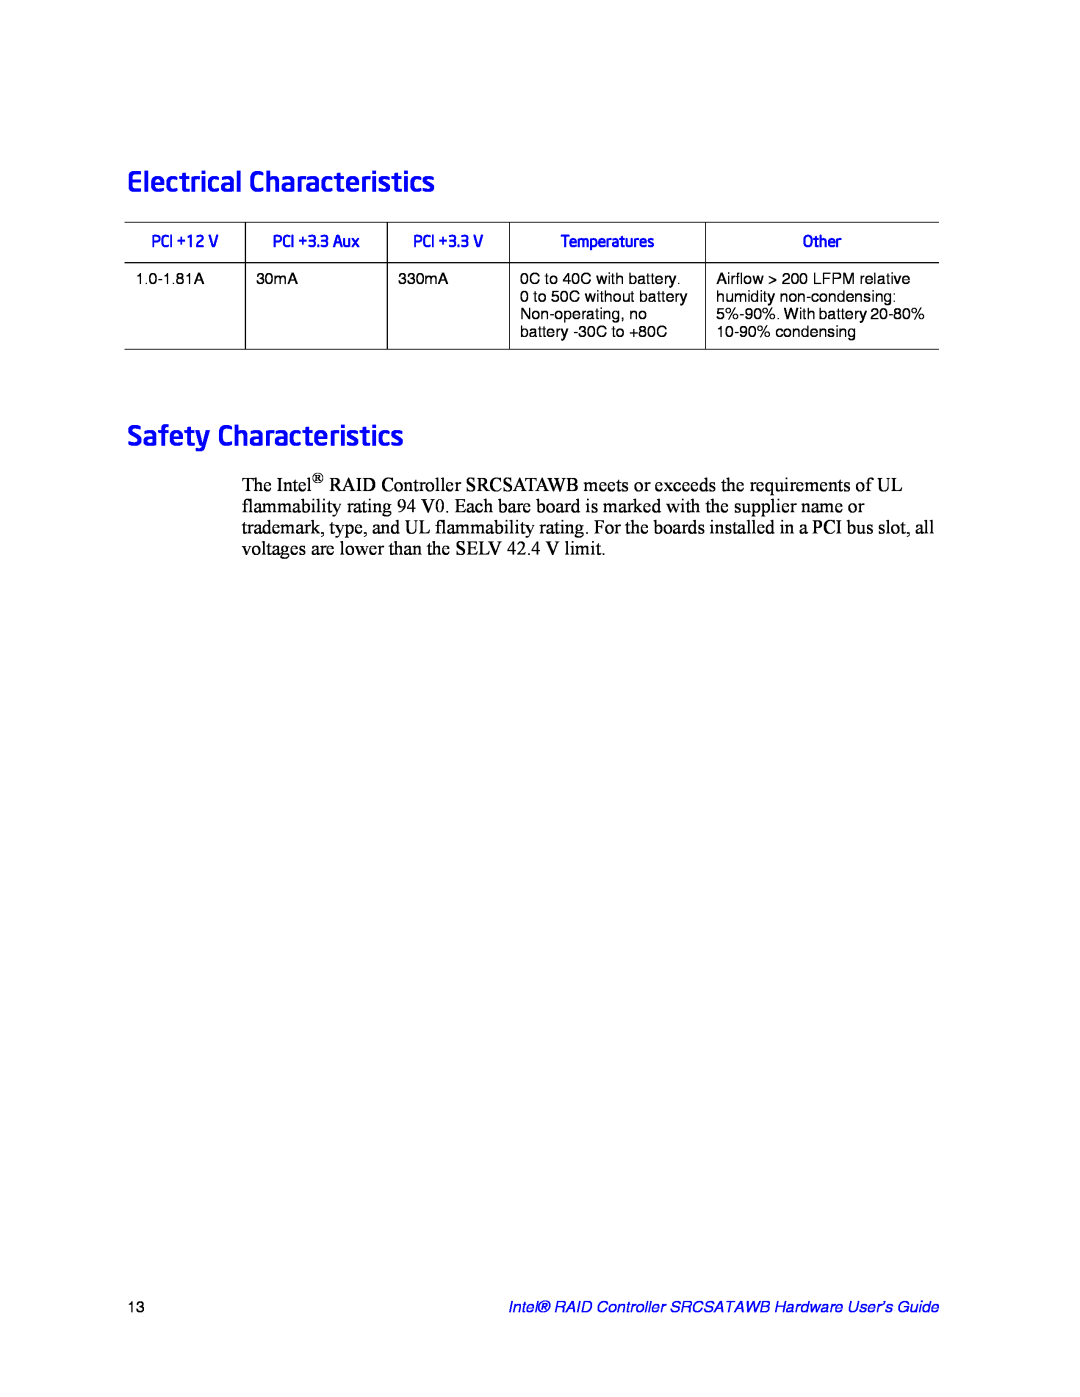 Intel SRCSATAWB manual Electrical Characteristics, Safety Characteristics, PCI +12, PCI +3.3 Aux, Temperatures, Other 